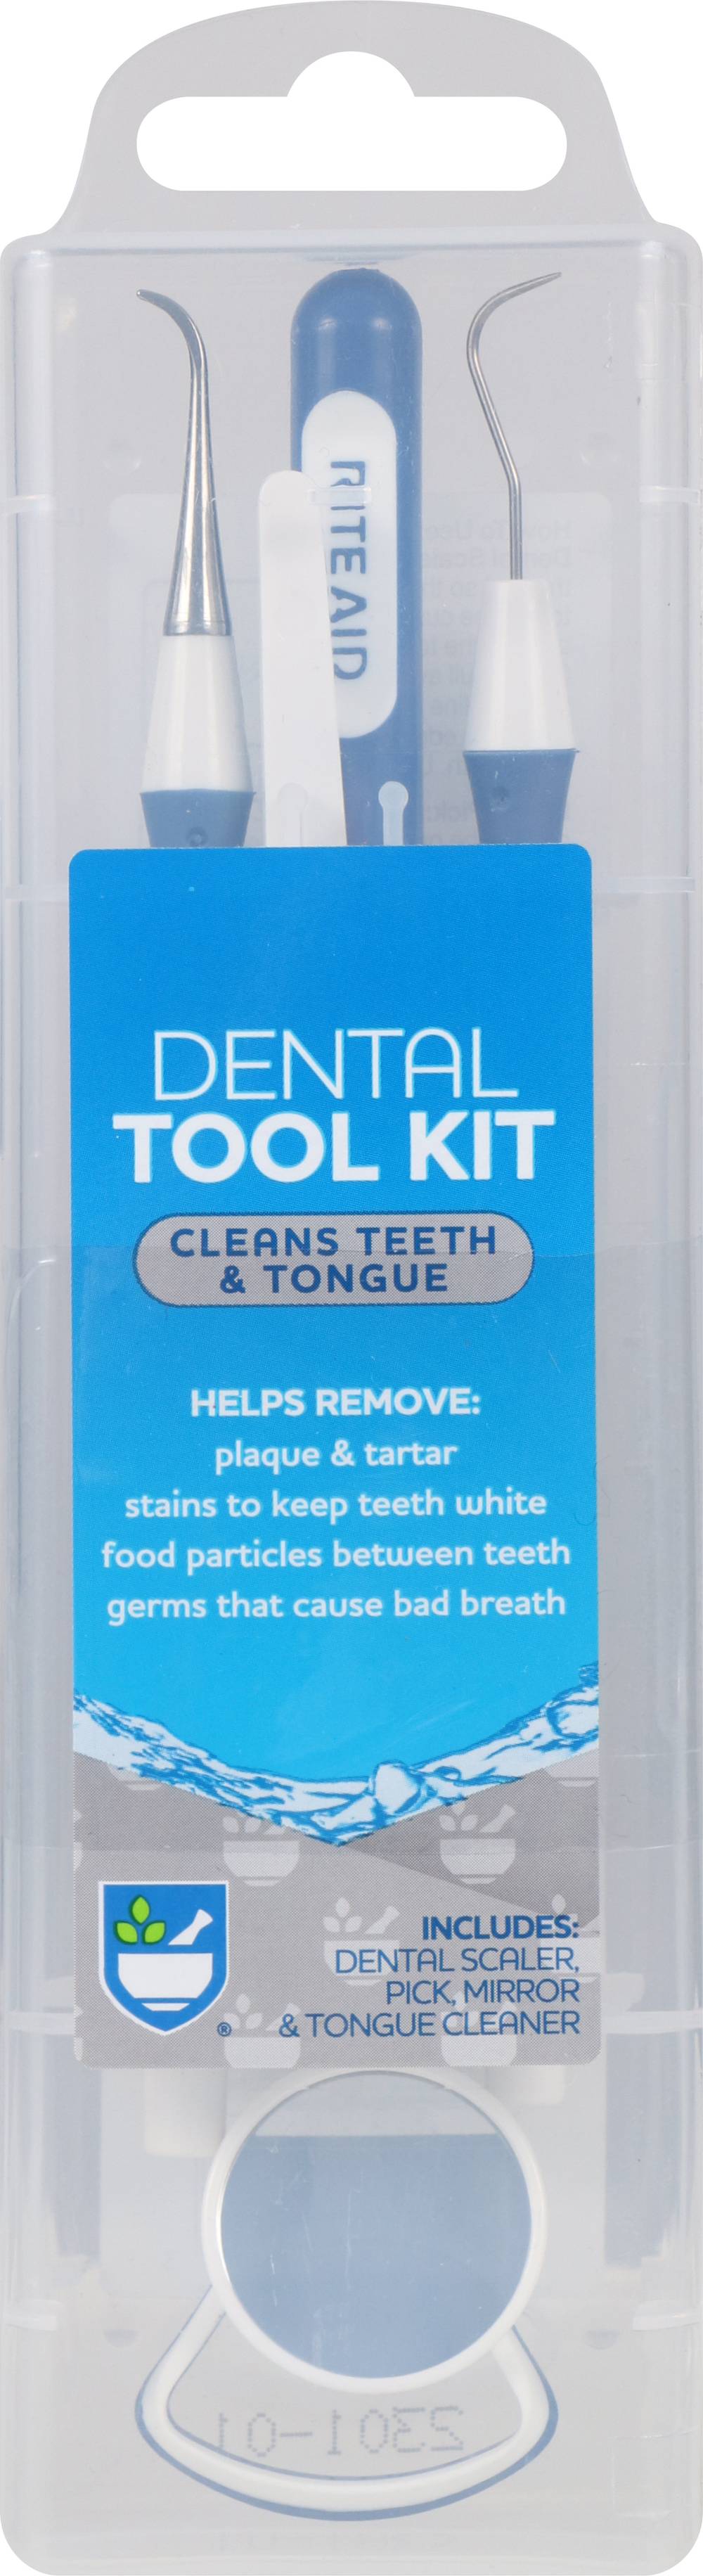 Rite Aid Oral Care Dental Tool Kit (1 ct)